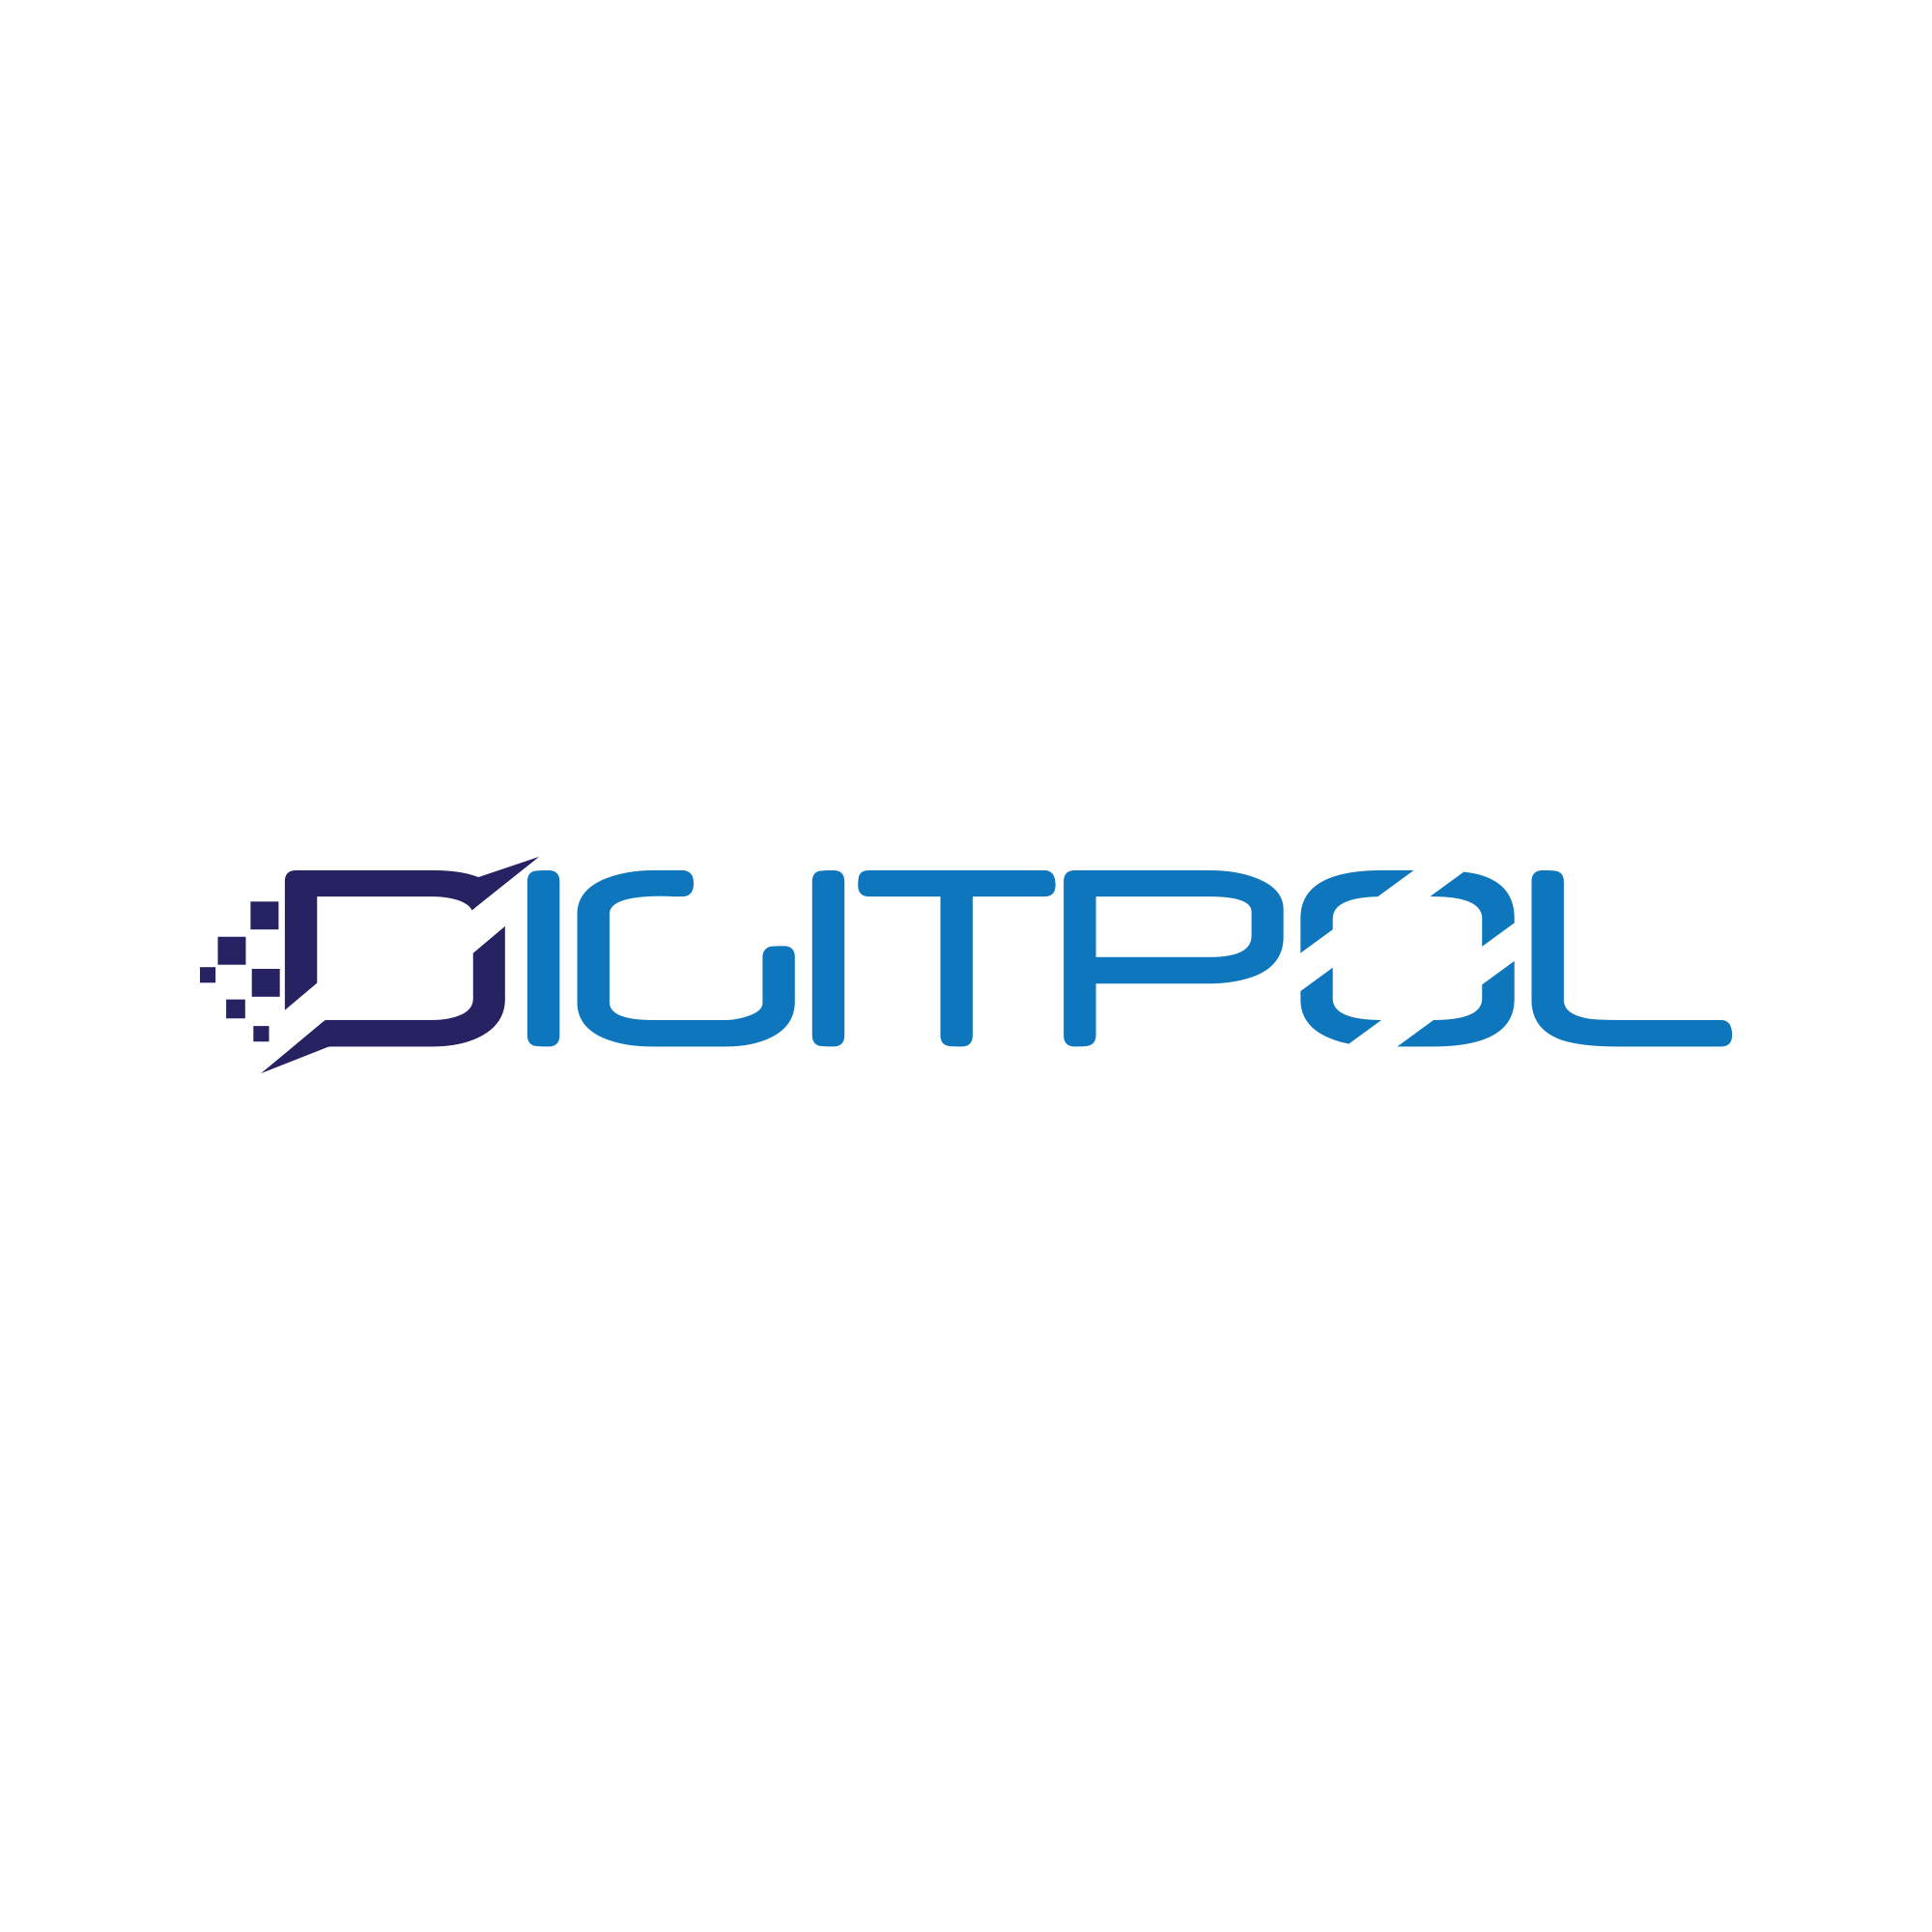 Digitpol logo